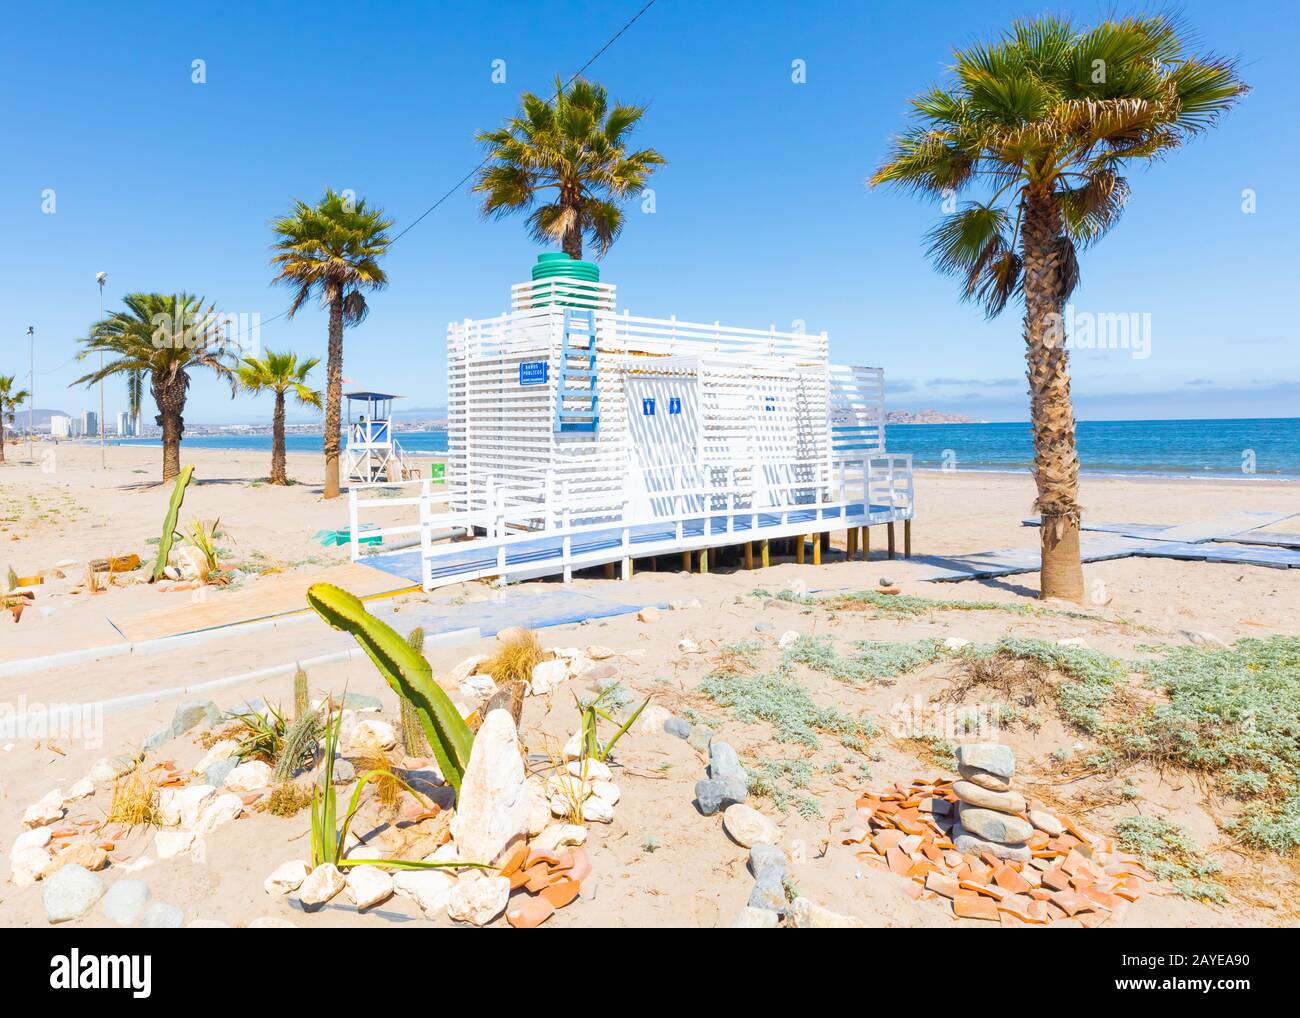 Chile Coquimbo public baths on the beach Stock Photo